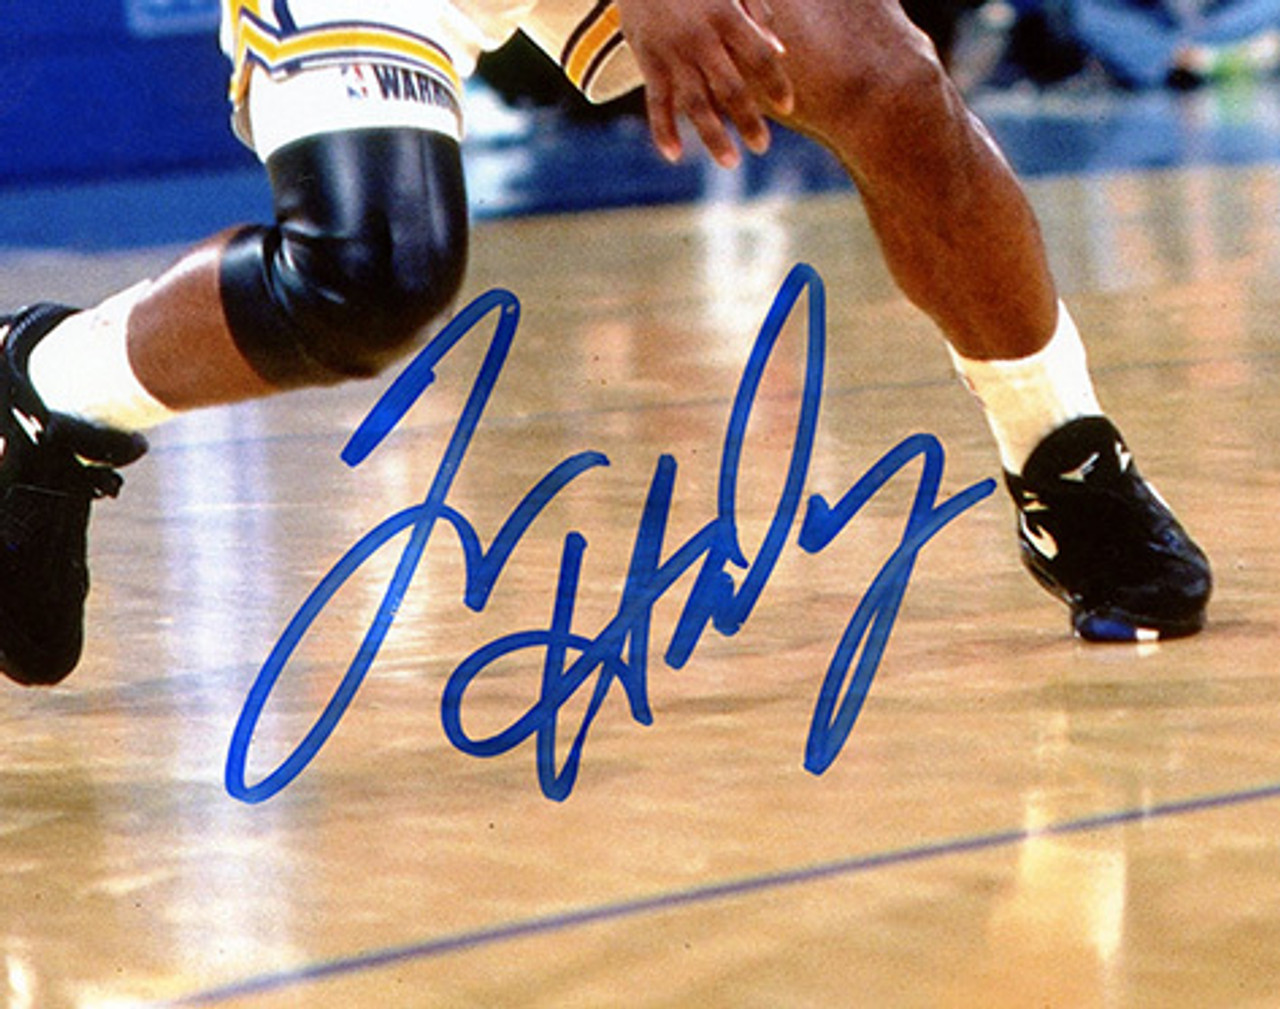 Tim Hardaway Signed Golden State Warriors NBA Basketball Jersey